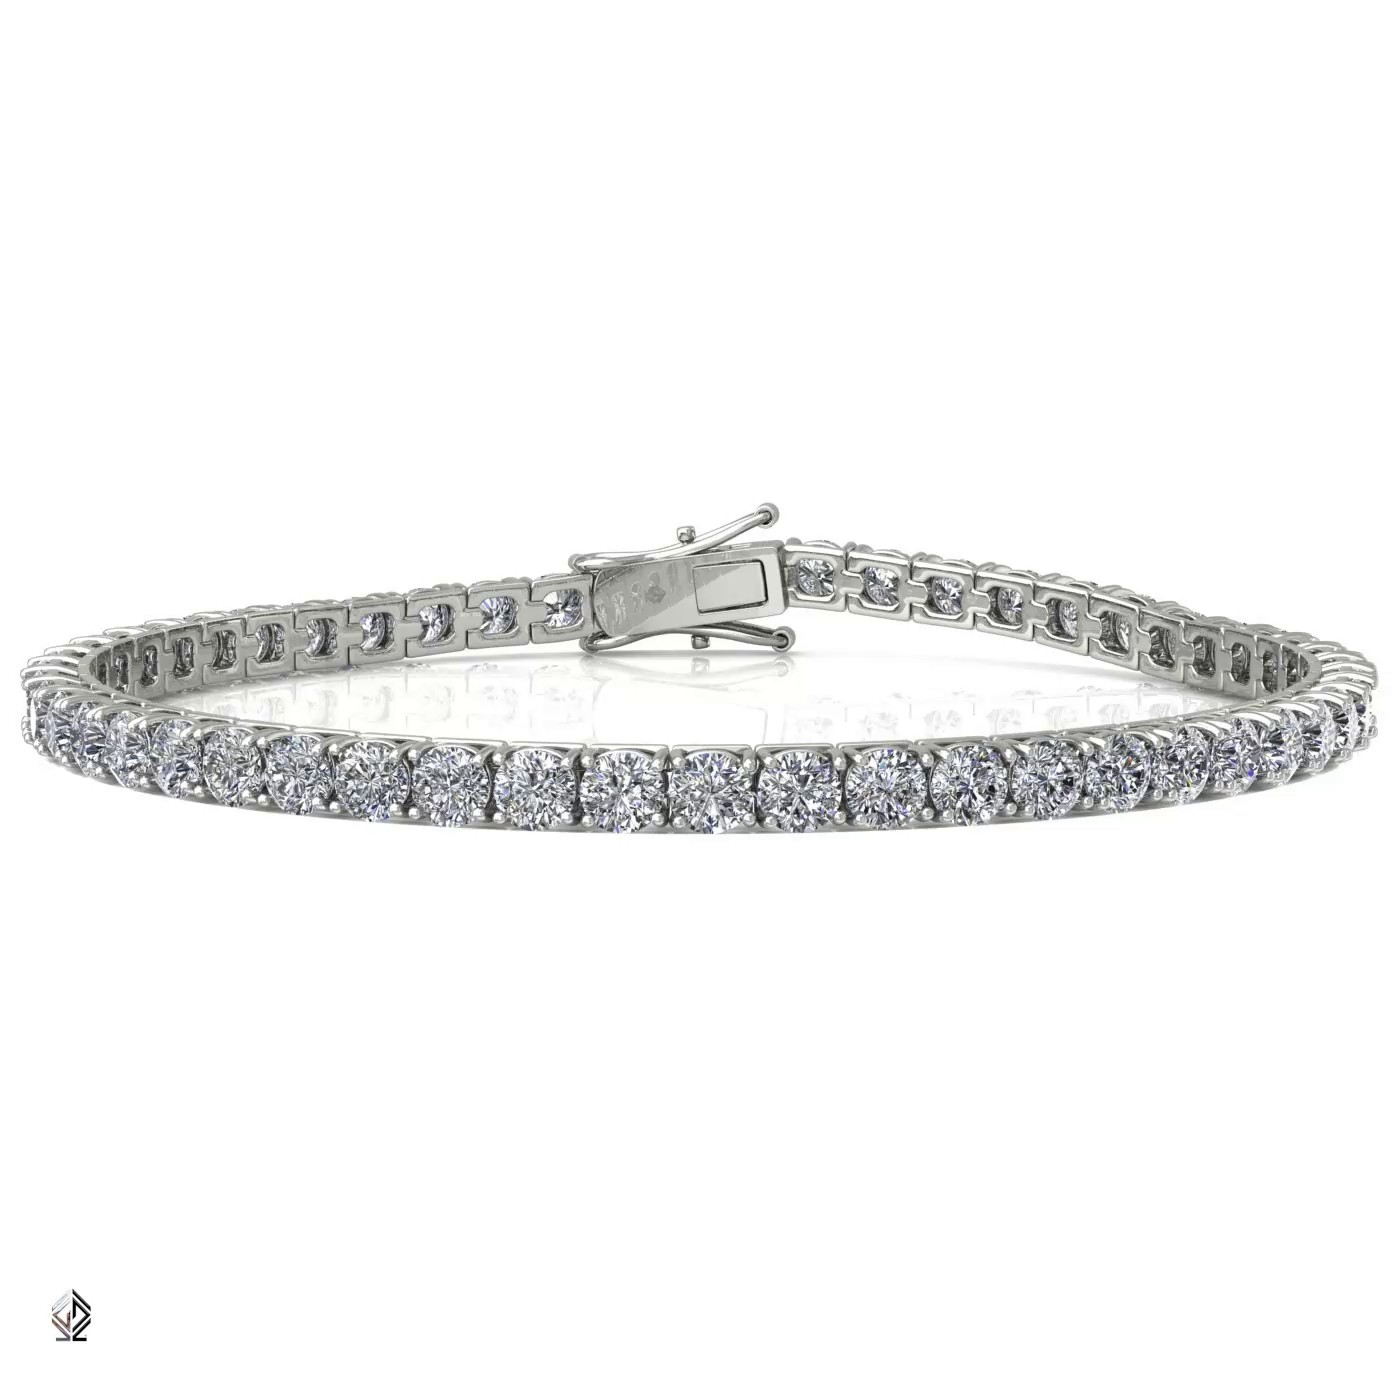 18k white gold 3.0mm 4 prong round shape diamond tennis bracelet in square setting Photos & images